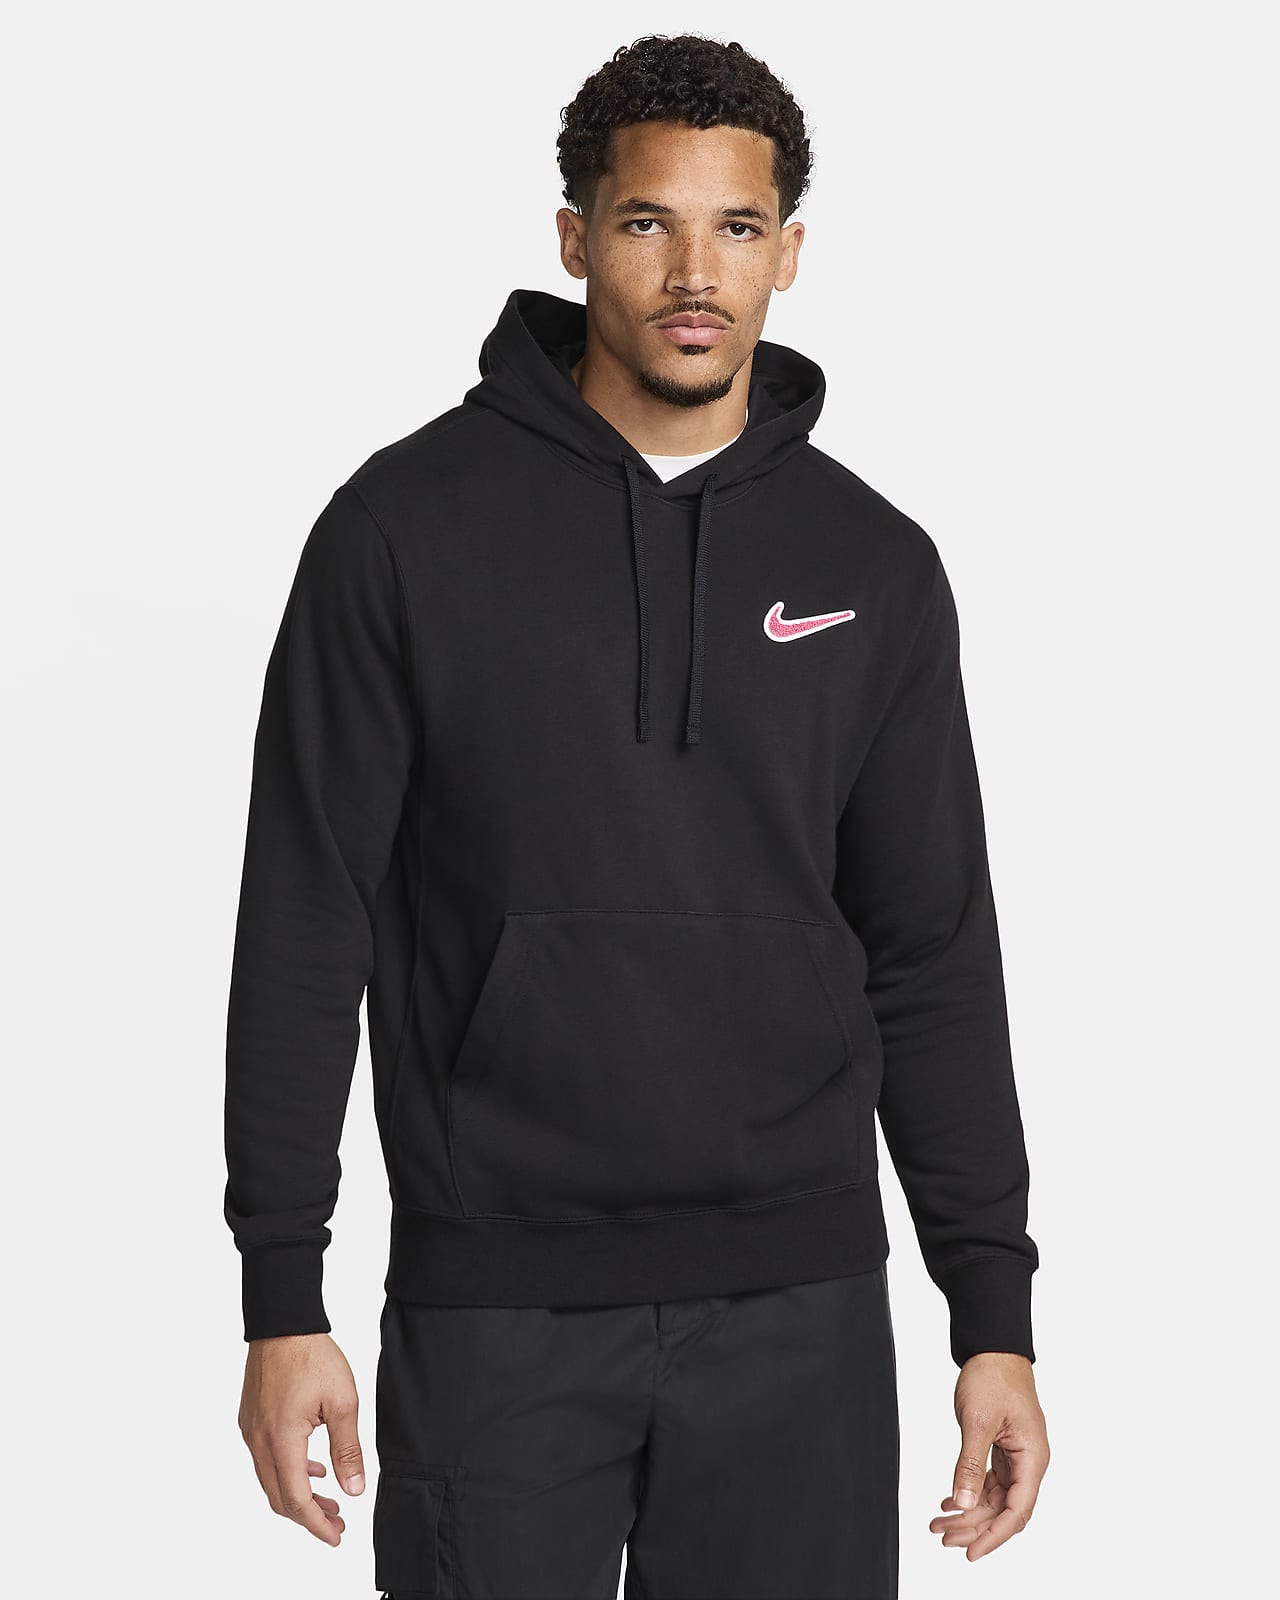 Nike Sportswear Men's Pullover Hoodie. Nike LU